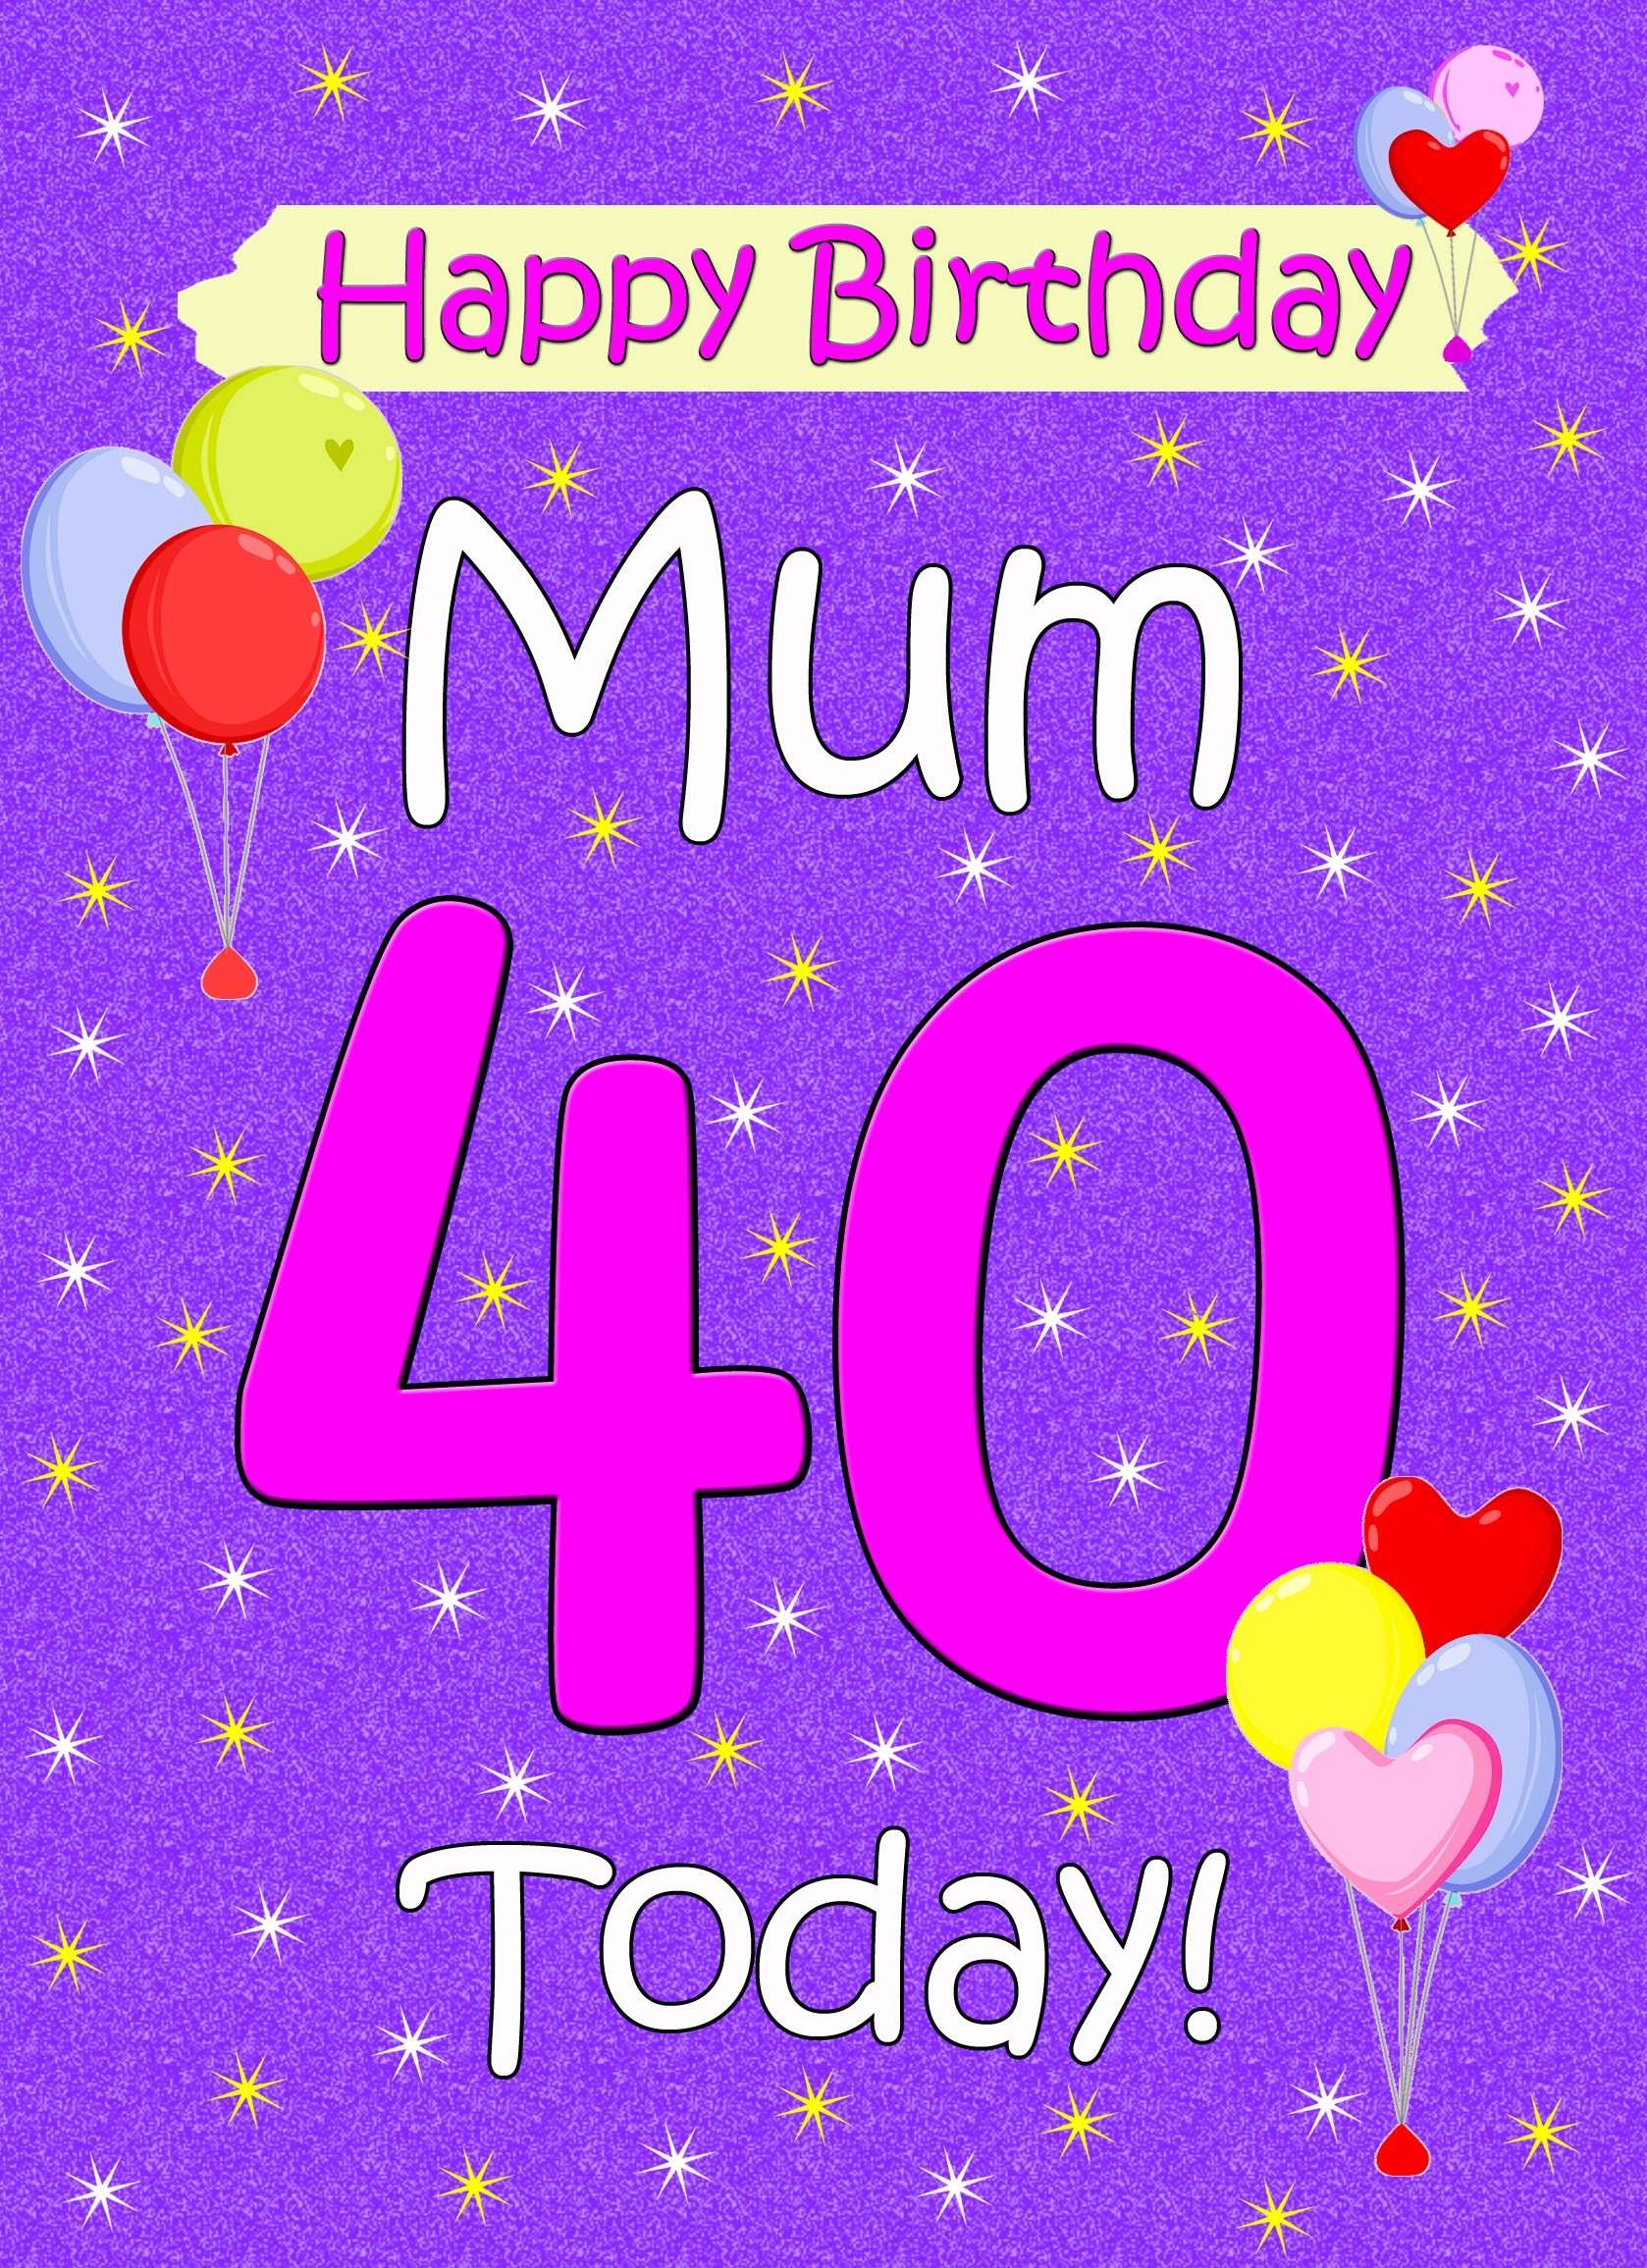 Mum 40th Birthday Card (Lilac)